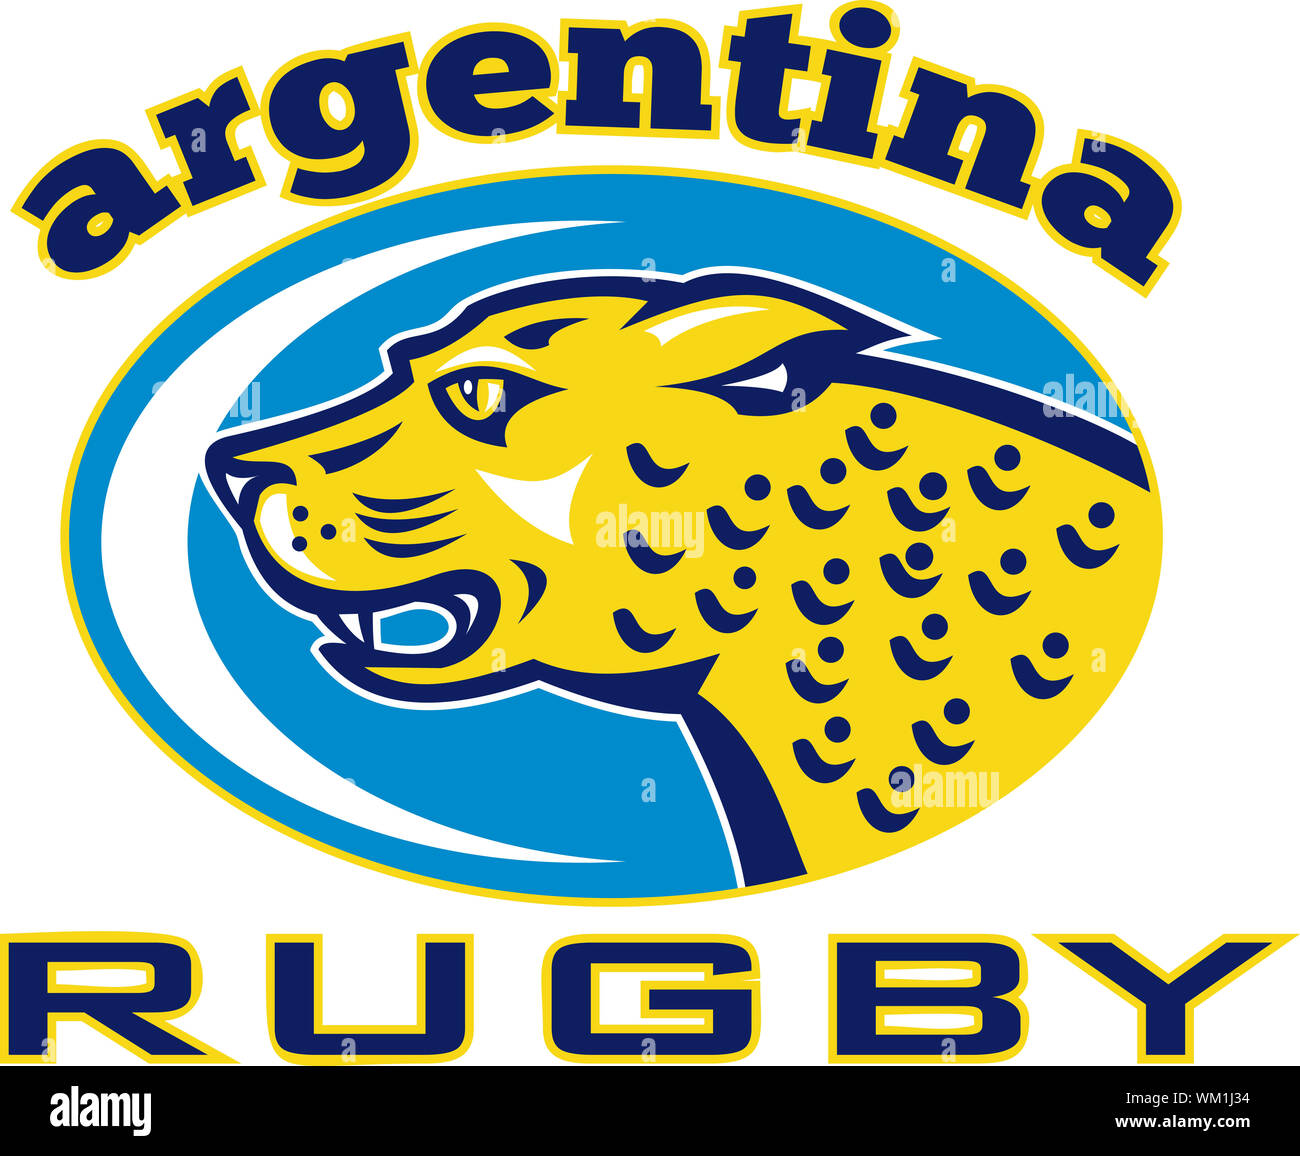 argentina rugby puma or jaguar